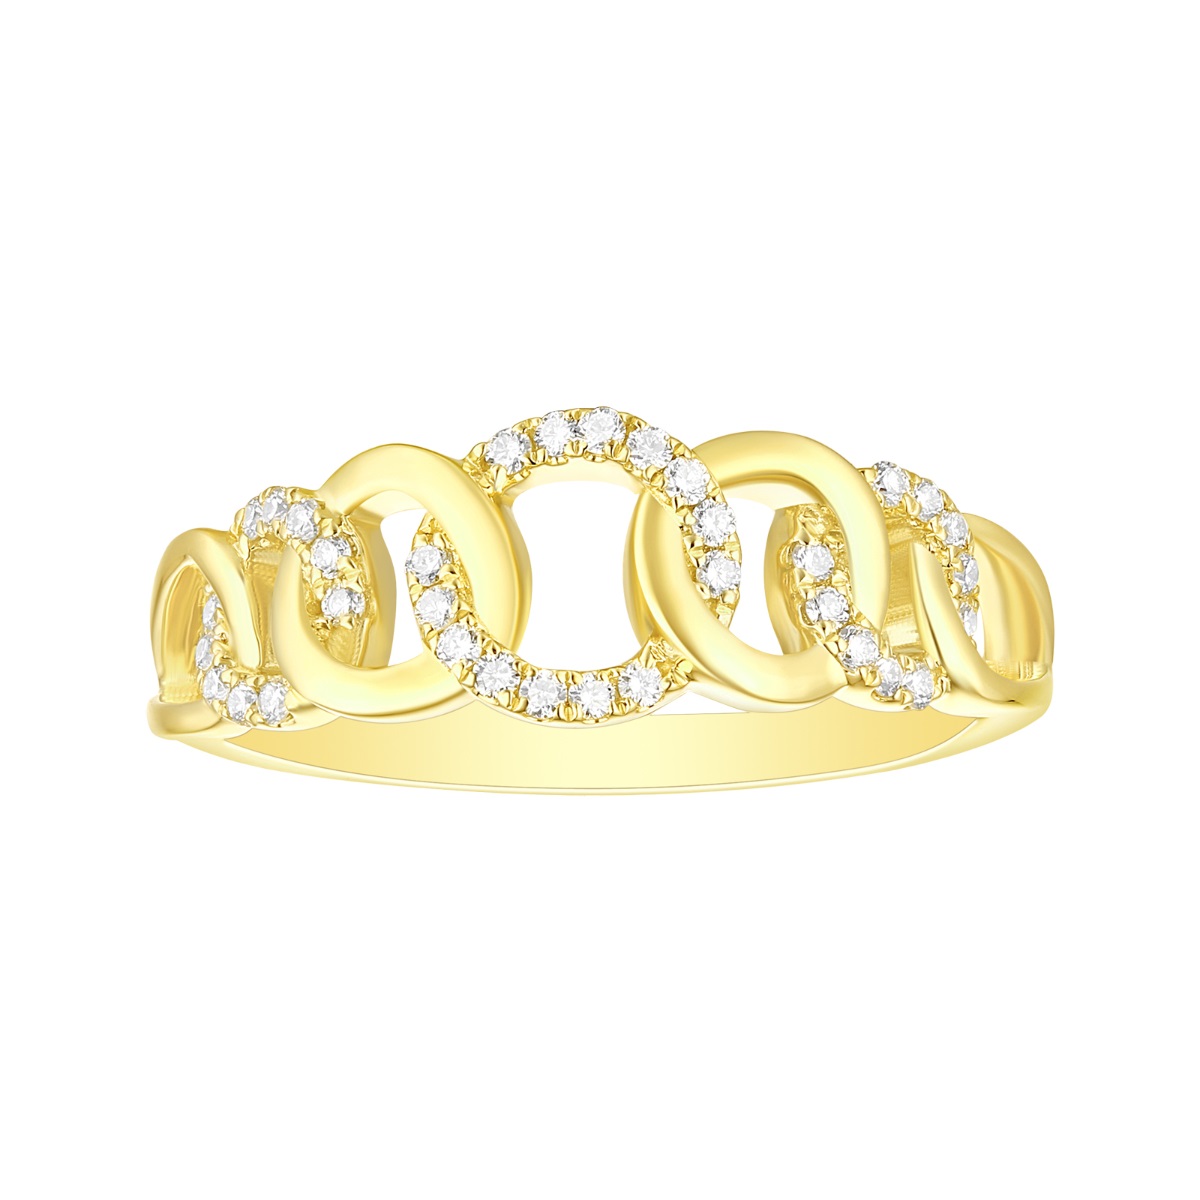 R35050WHT – 18K Yellow Gold  Diamond Ring, 0.15 TCW